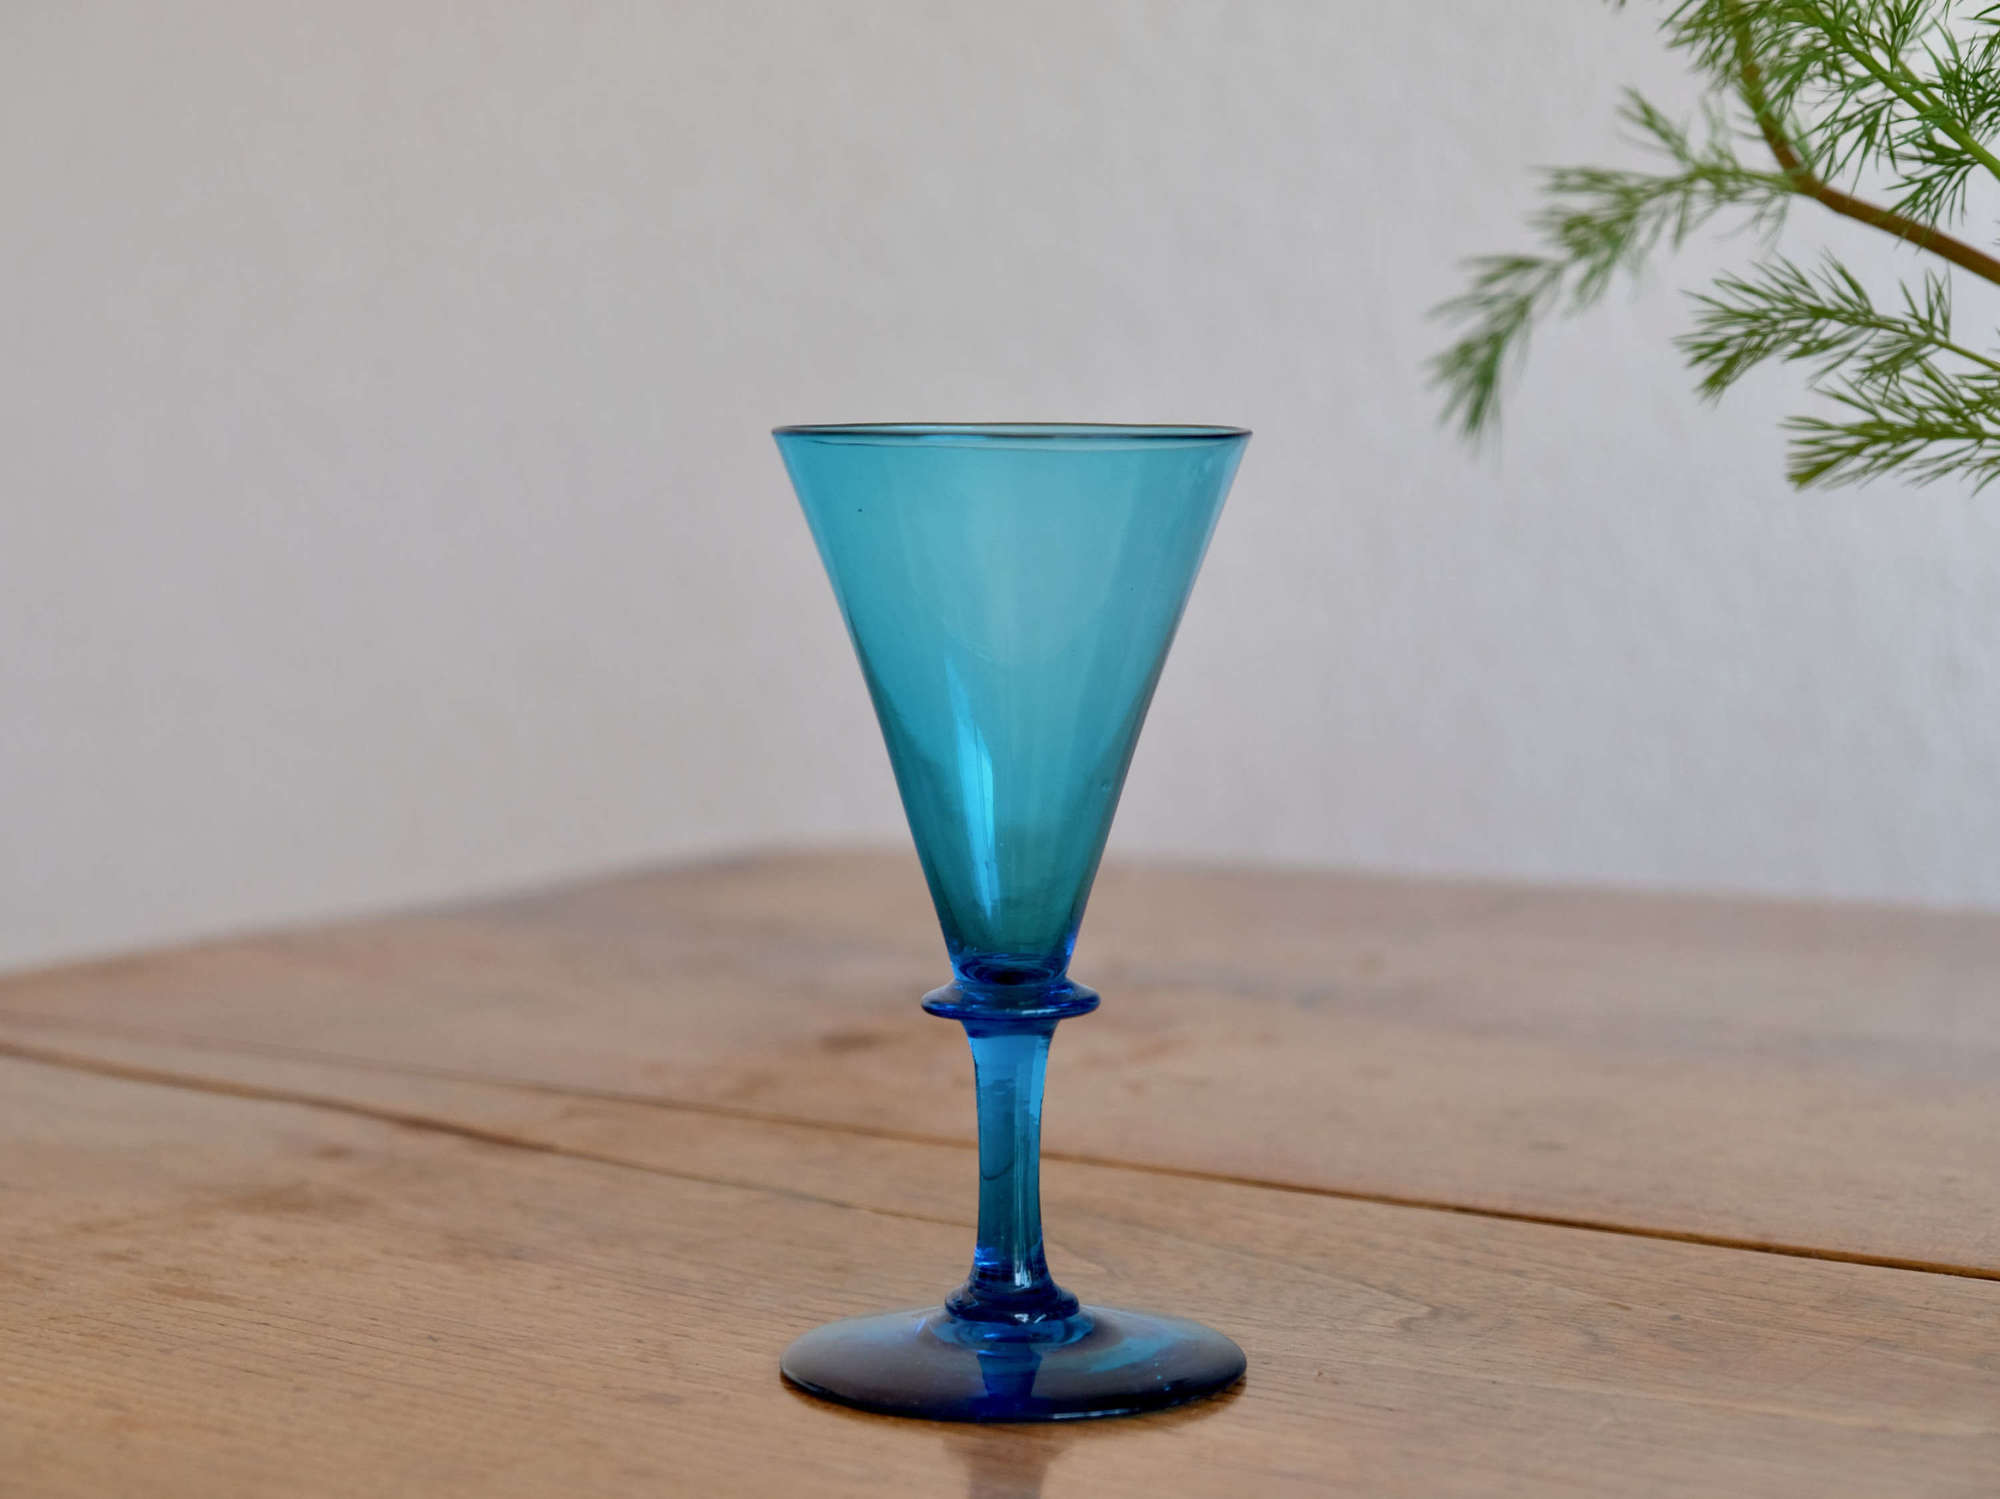 Antique glass - Kingfisher blue wine glass English c1850